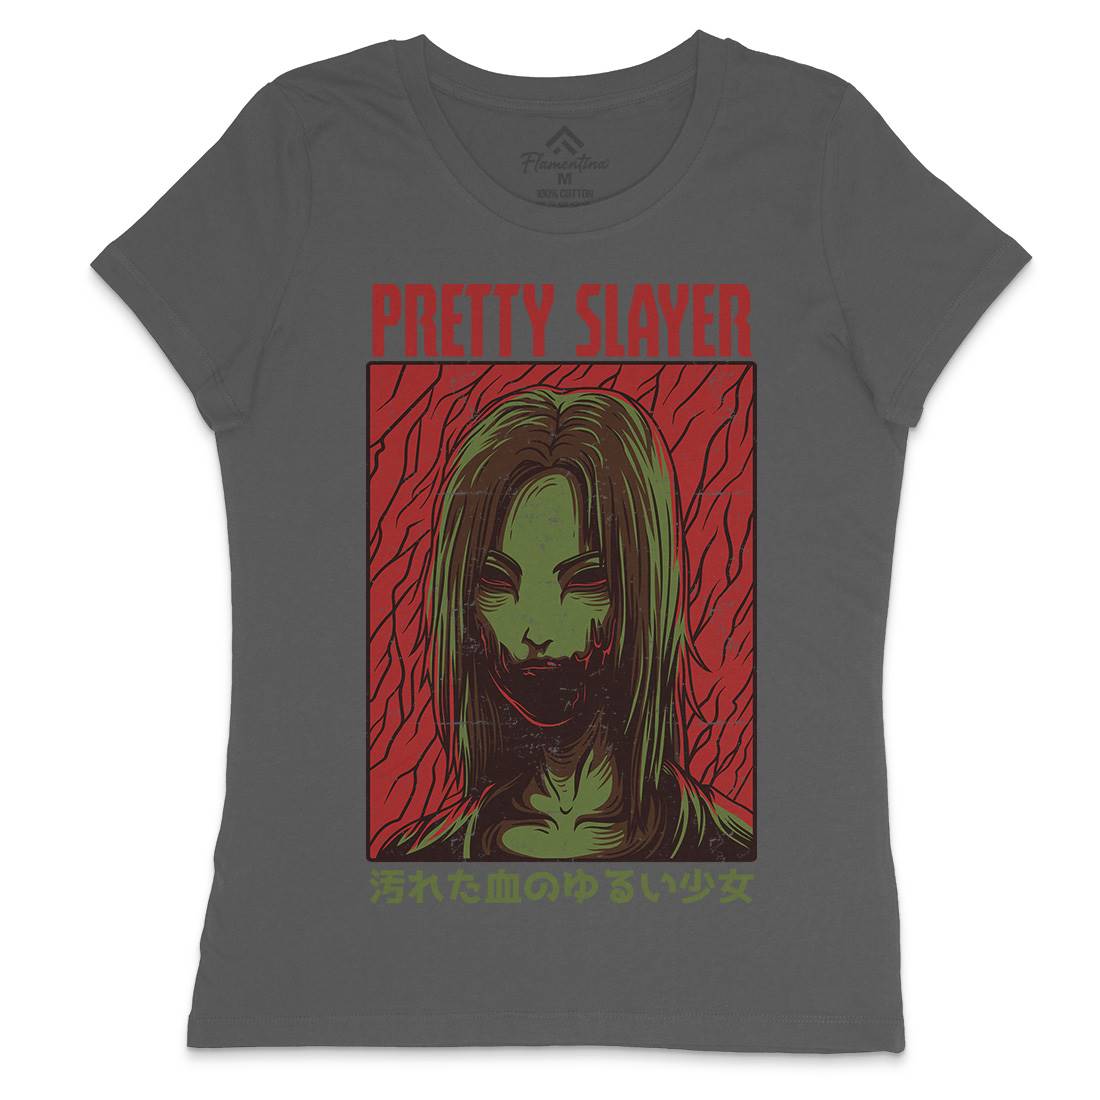 Pretty Slayer Womens Crew Neck T-Shirt Horror D682